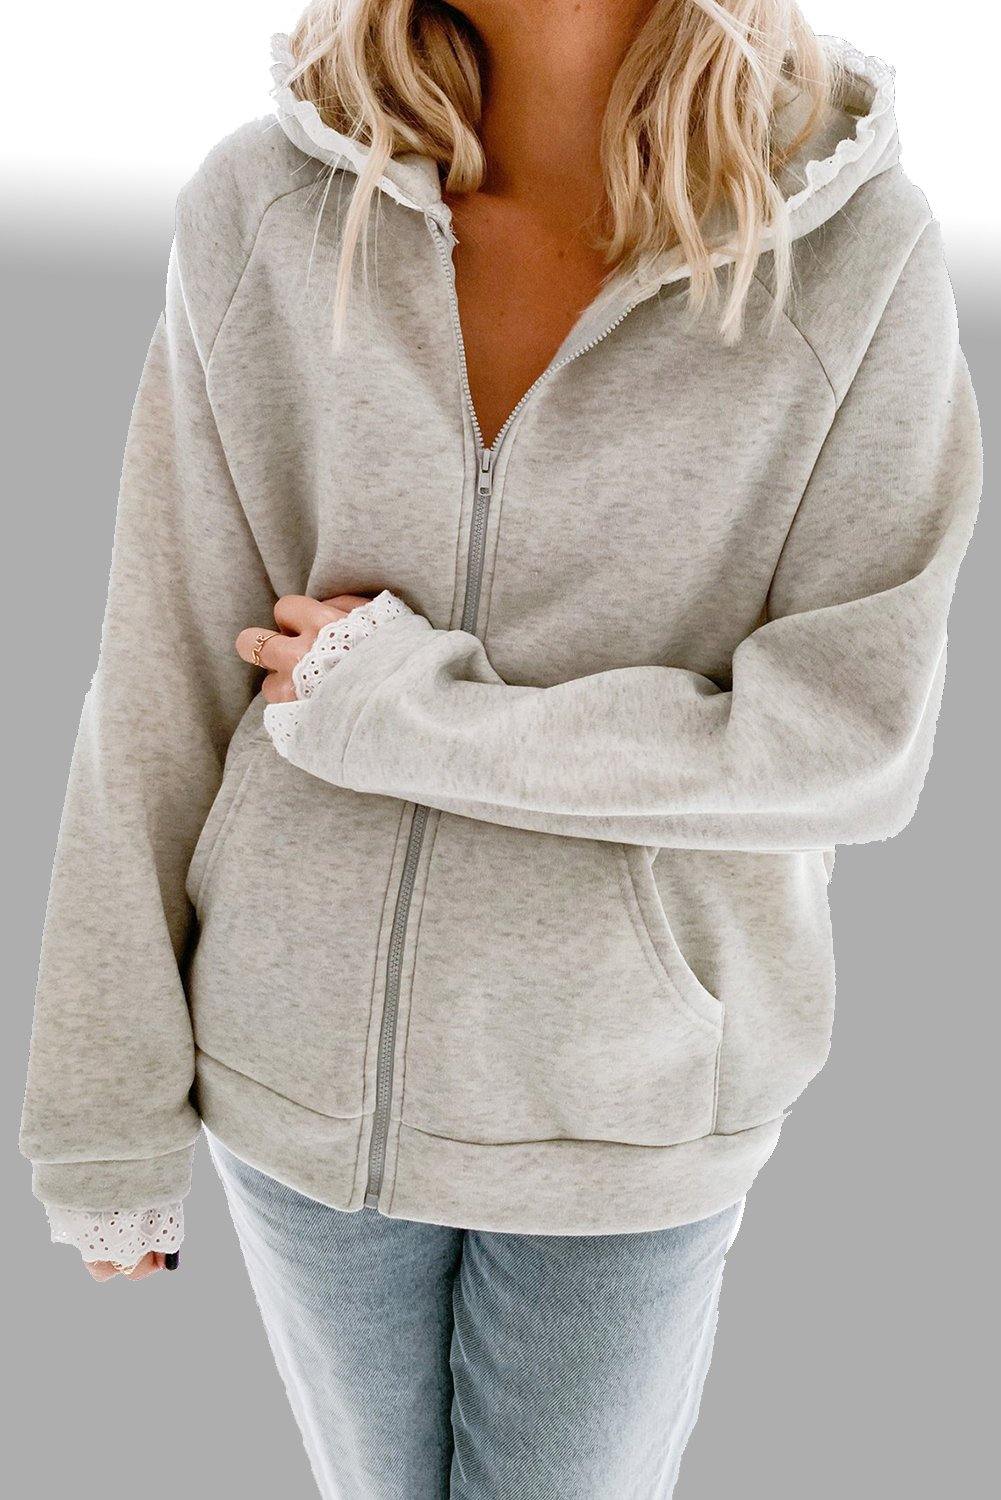 Zip-up Lace Trim Hooded Coat - L & M Kee, LLC